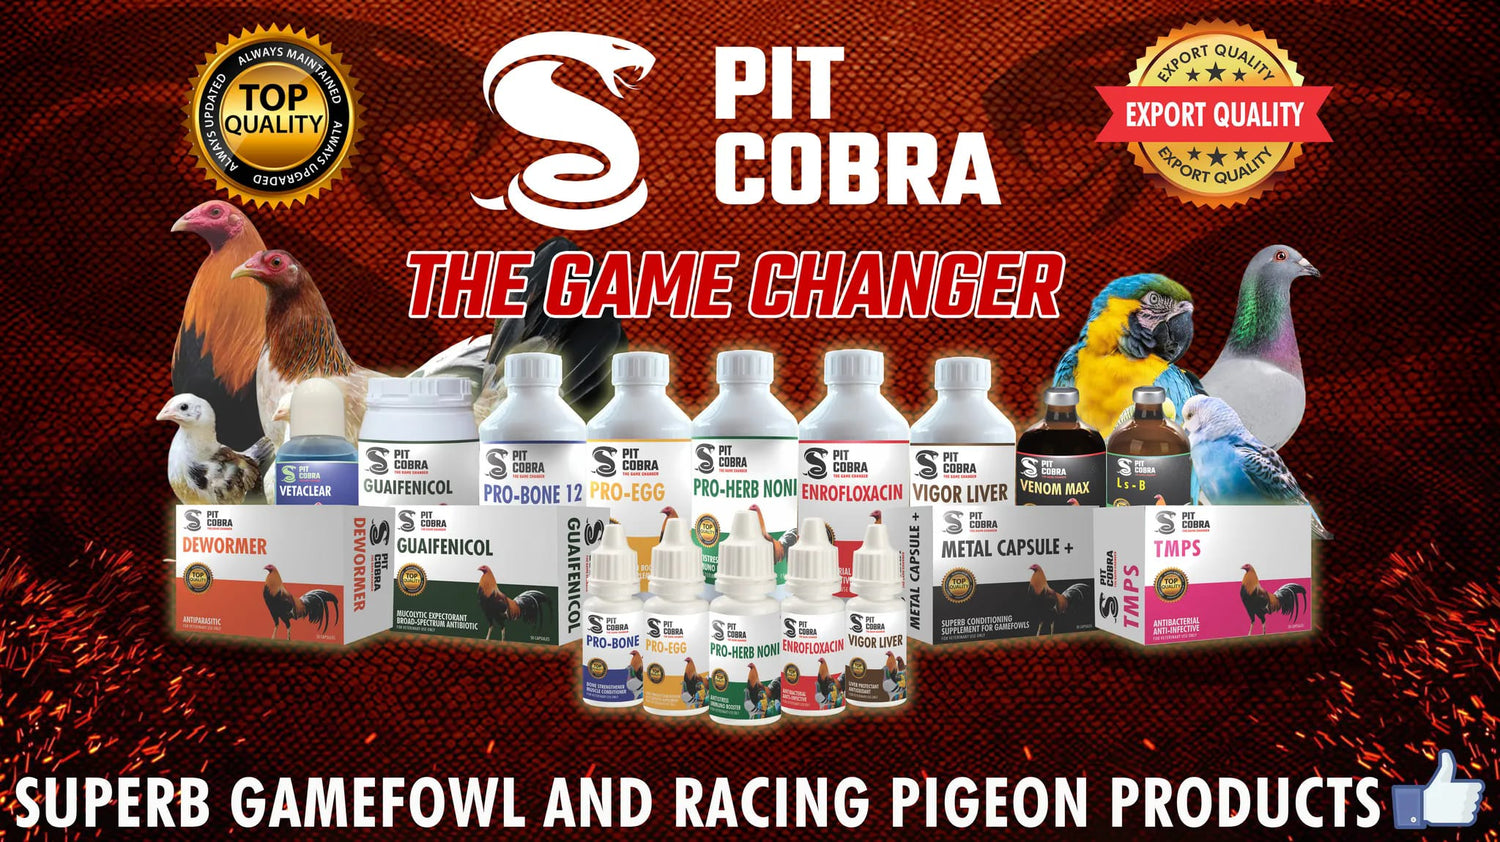 Pit Cobra Products